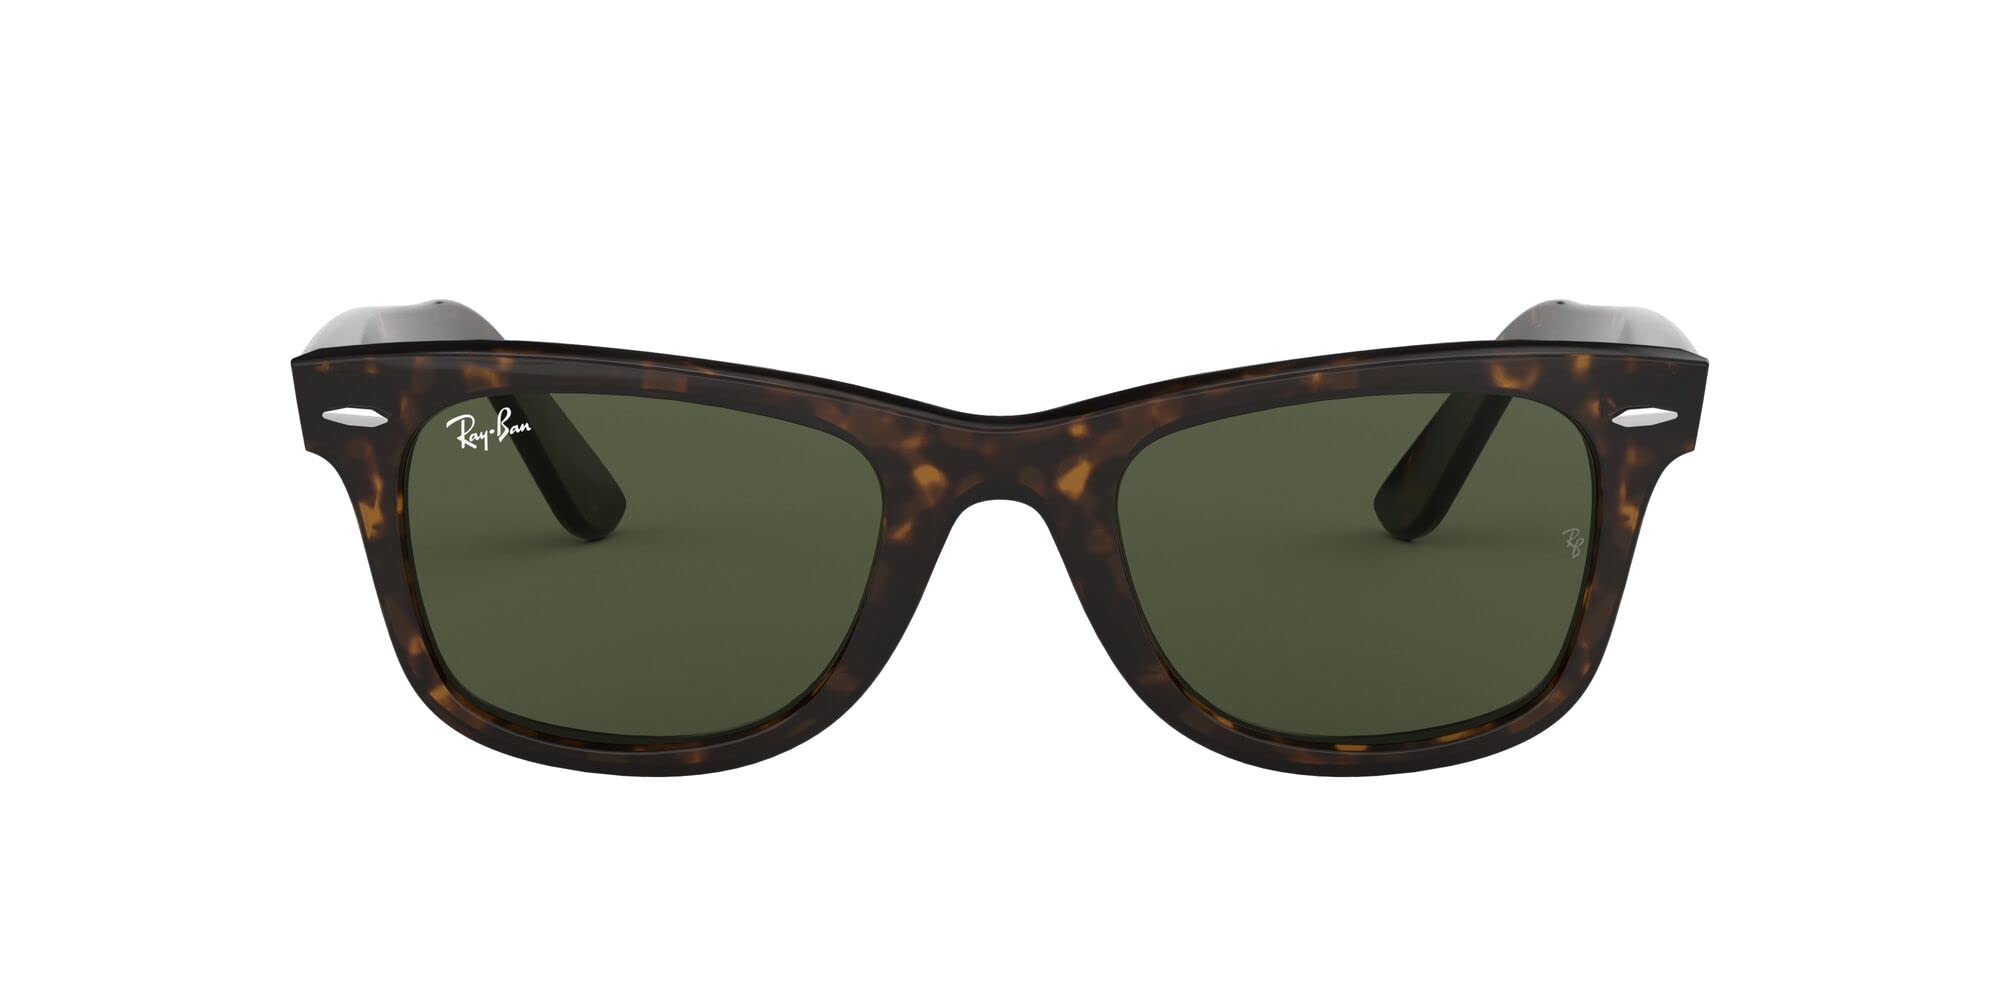 Ray-Ban RB2140 Original Wayfarer Square Sunglasses, Tortoise/G-15 Green, 50 mm